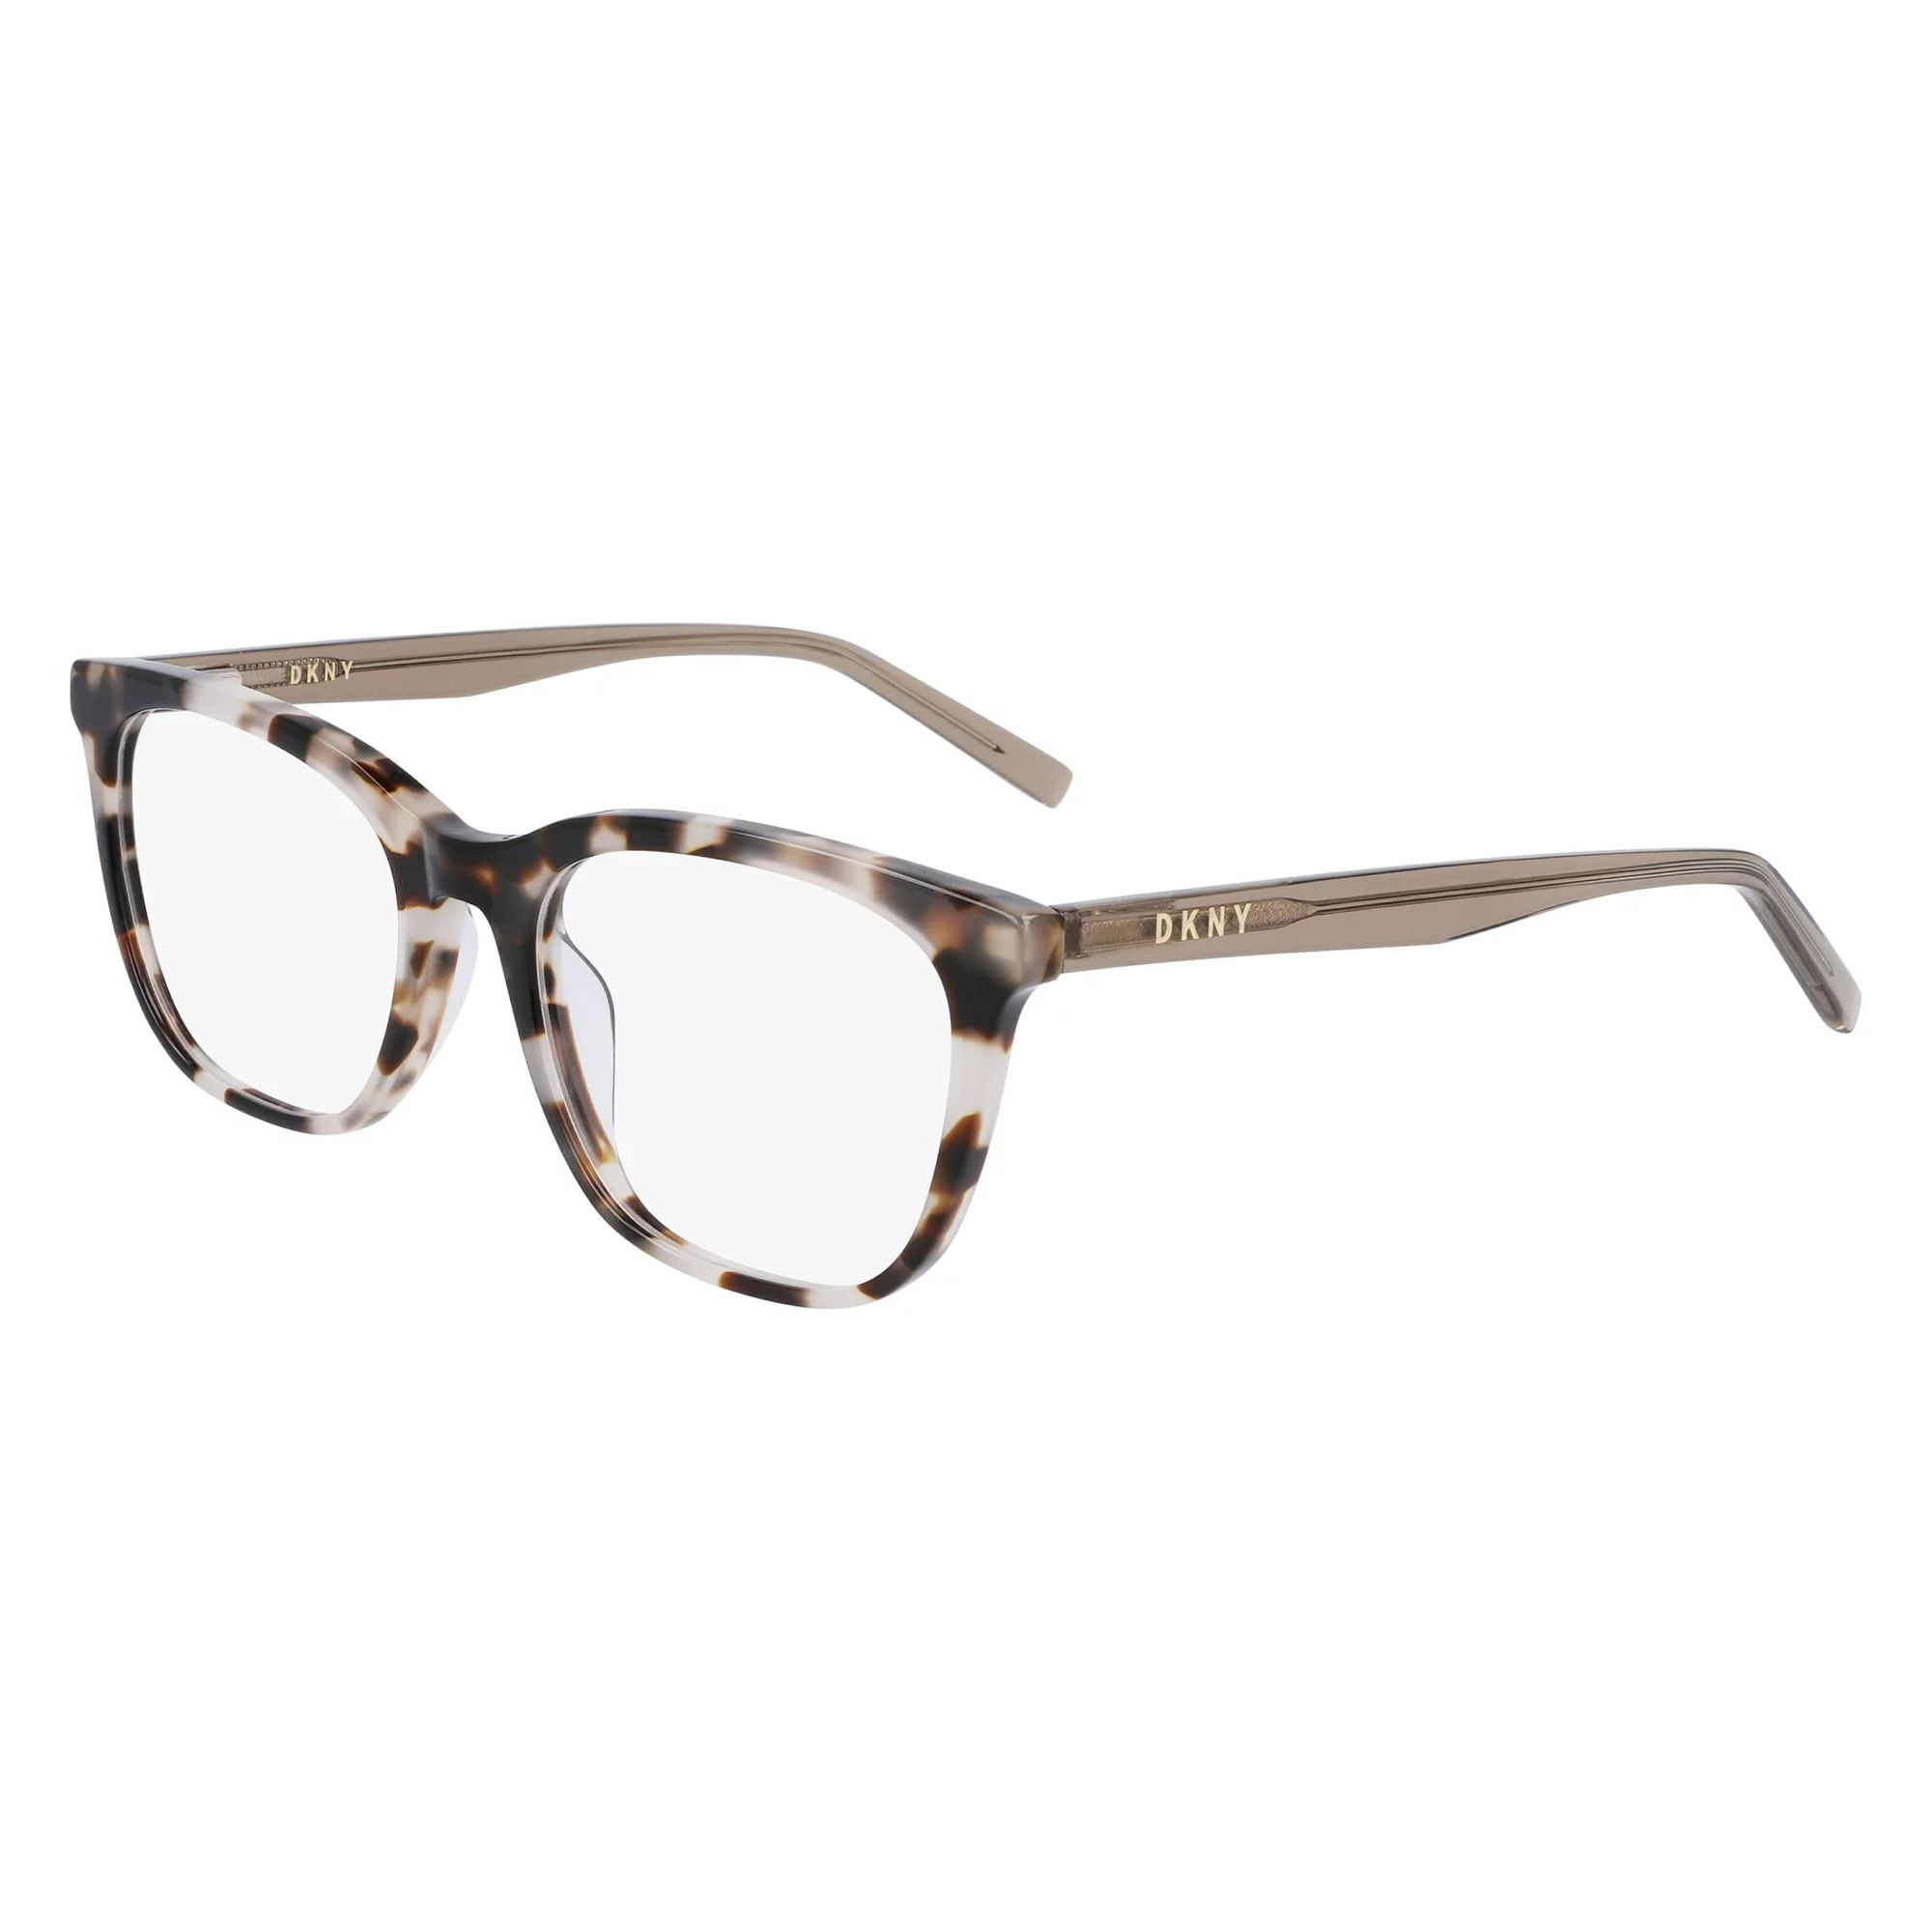 Eyeglasses DKNY DK 5040 275 Bone Tortoise | Walmart (US)